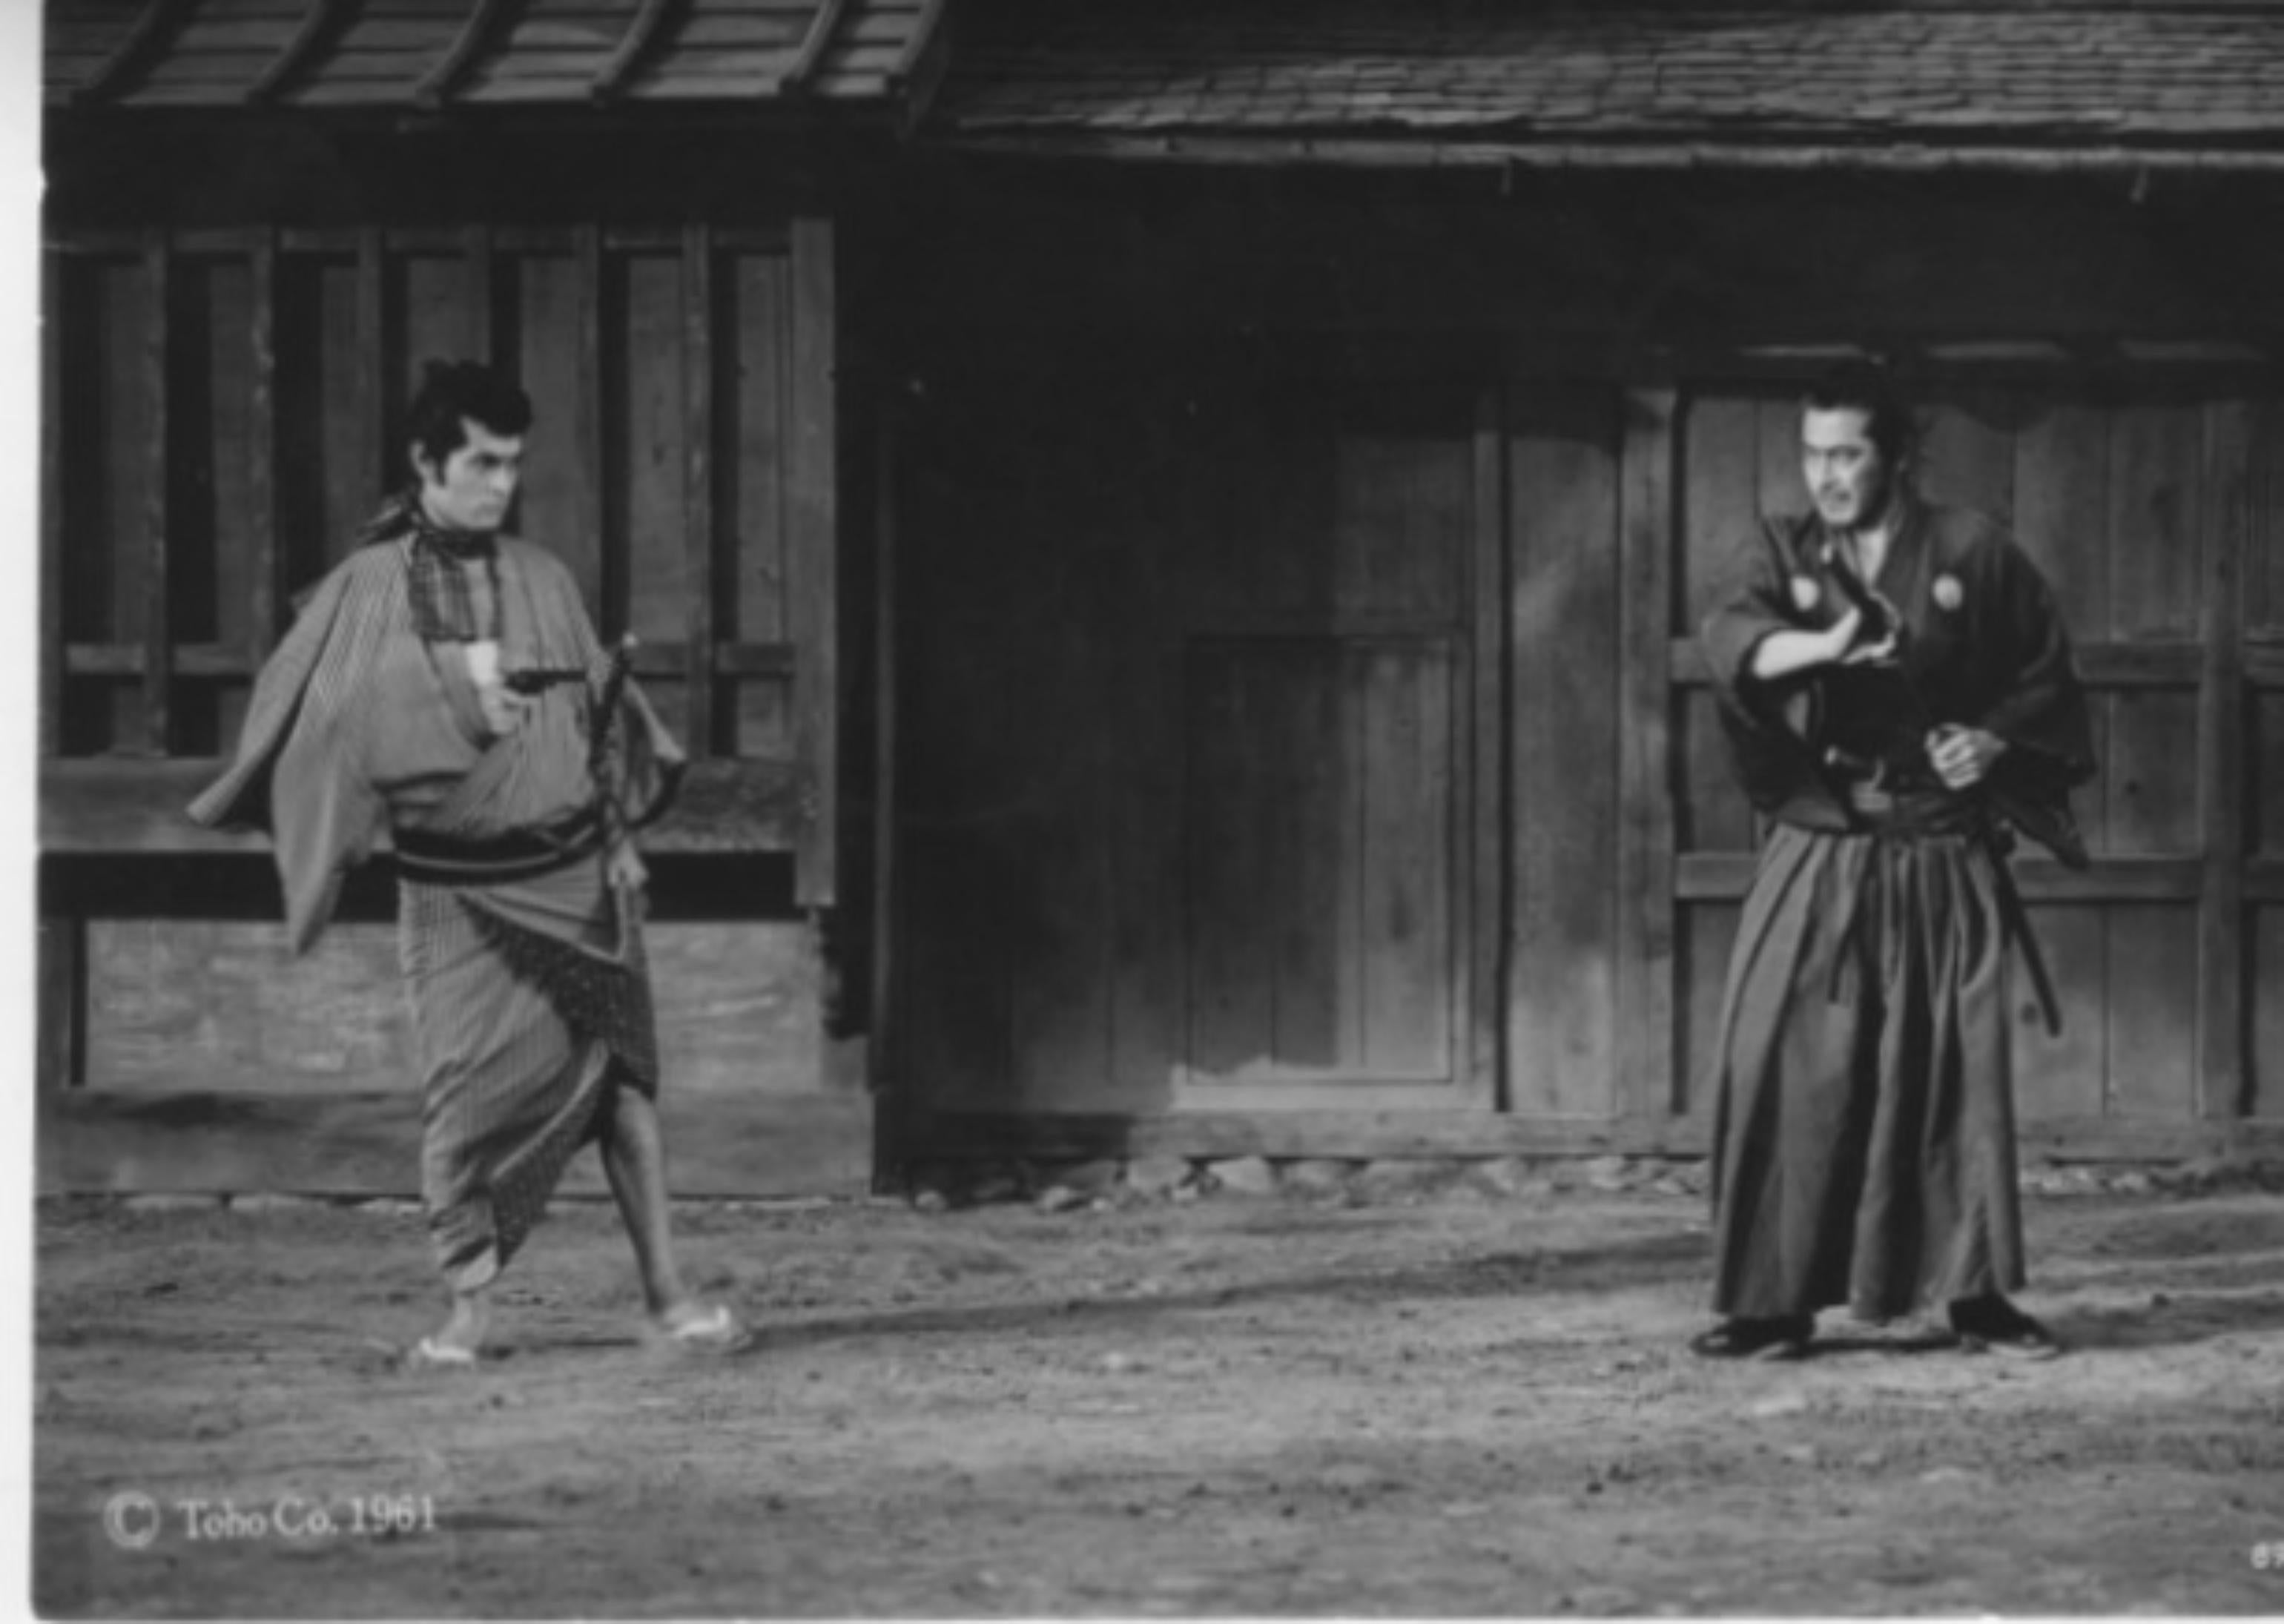 Szene aus Yojimbo (Film) - Vintage-Foto - 1960er Jahre